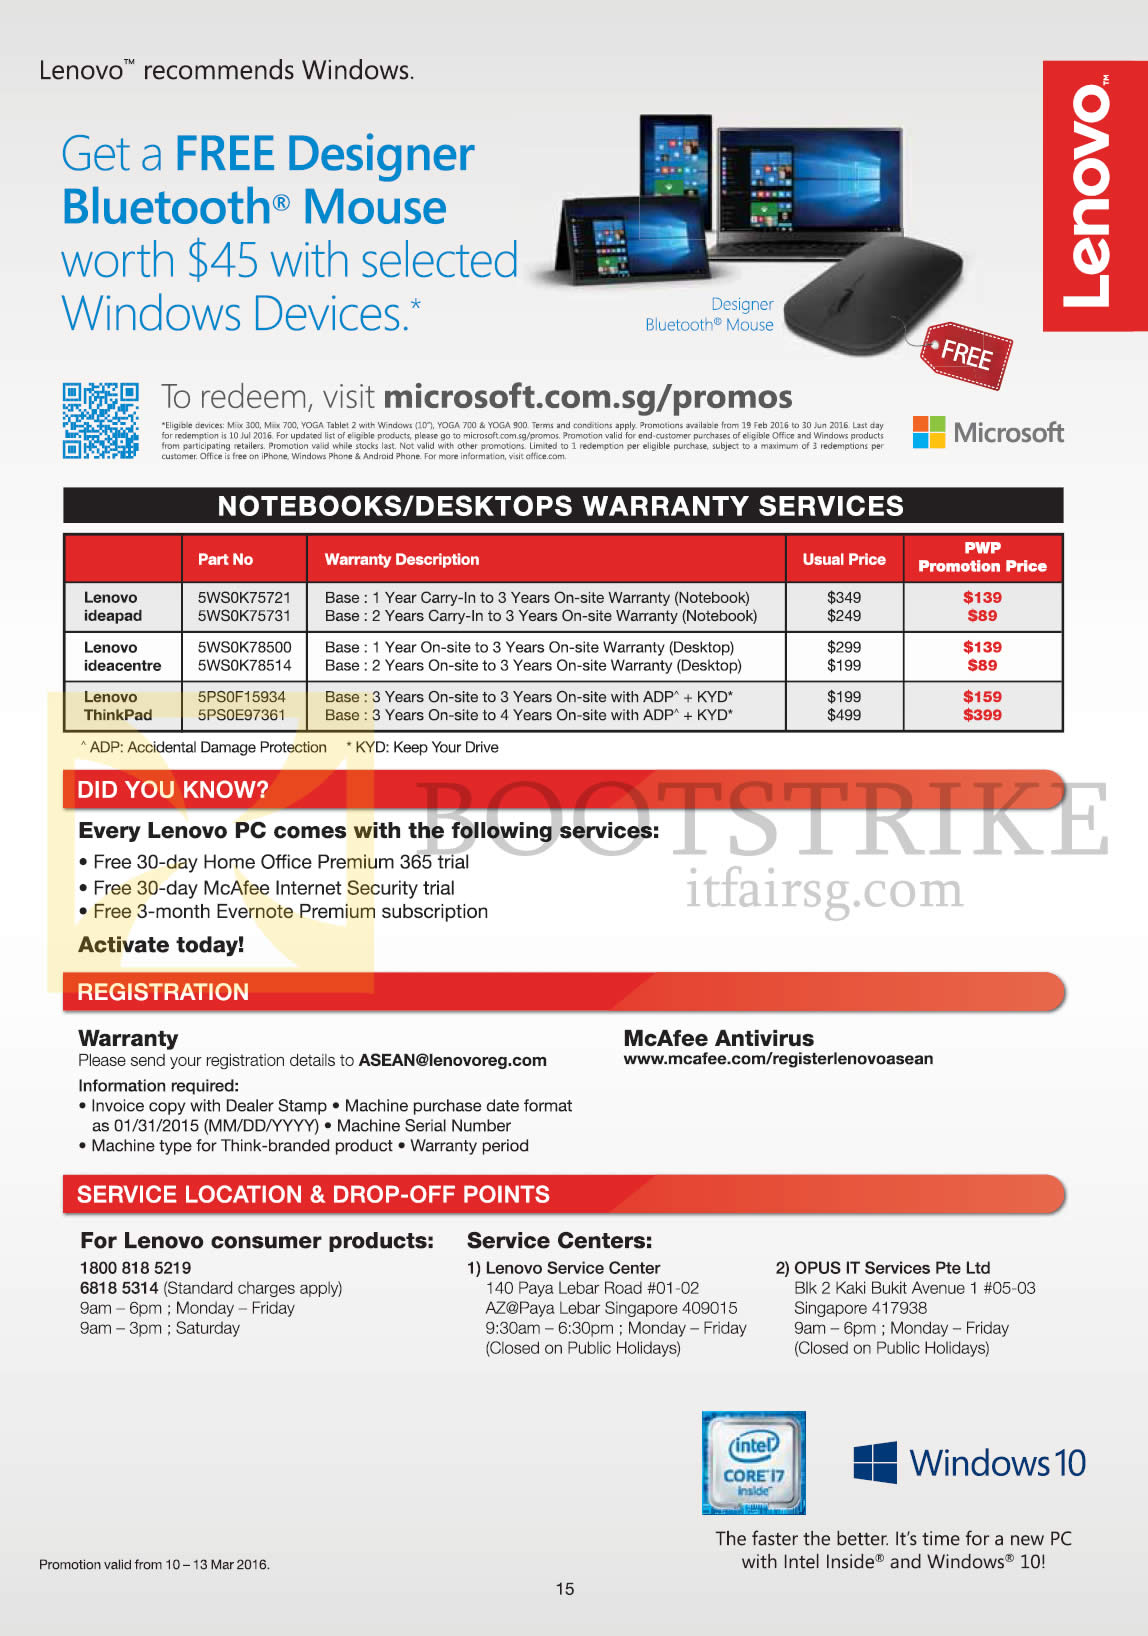 IT SHOW 2016 price list image brochure of Lenovo Free Designer Bluetooth Mouse, Notebooks, Desktops Warranty Services